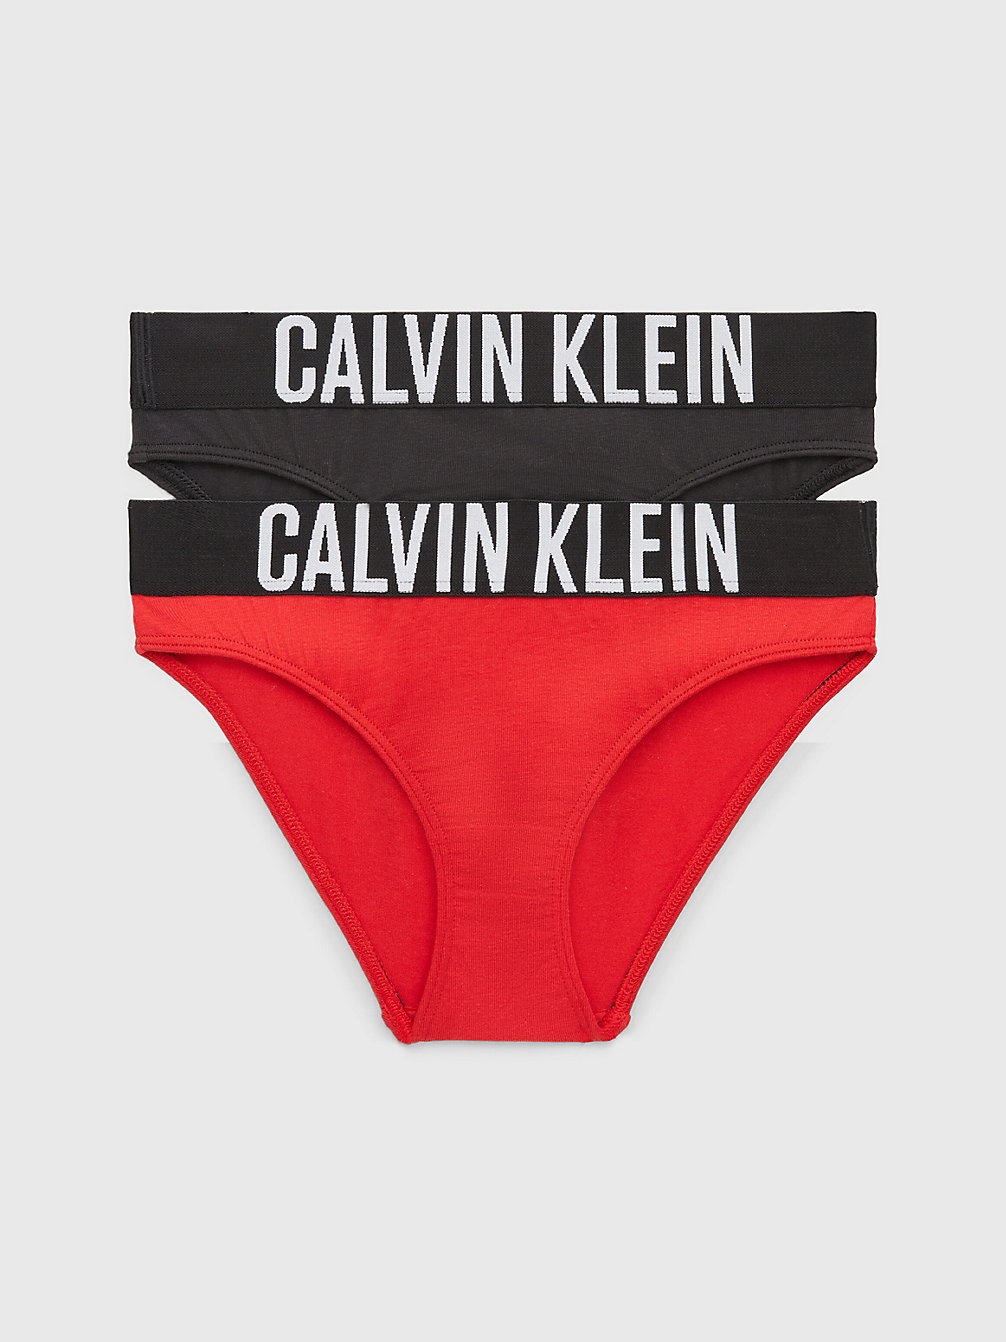 Confezione Da 2 Slip Bikini Bambina - Intense Power > REDHOT/PVHBLACK > undefined girls > Calvin Klein